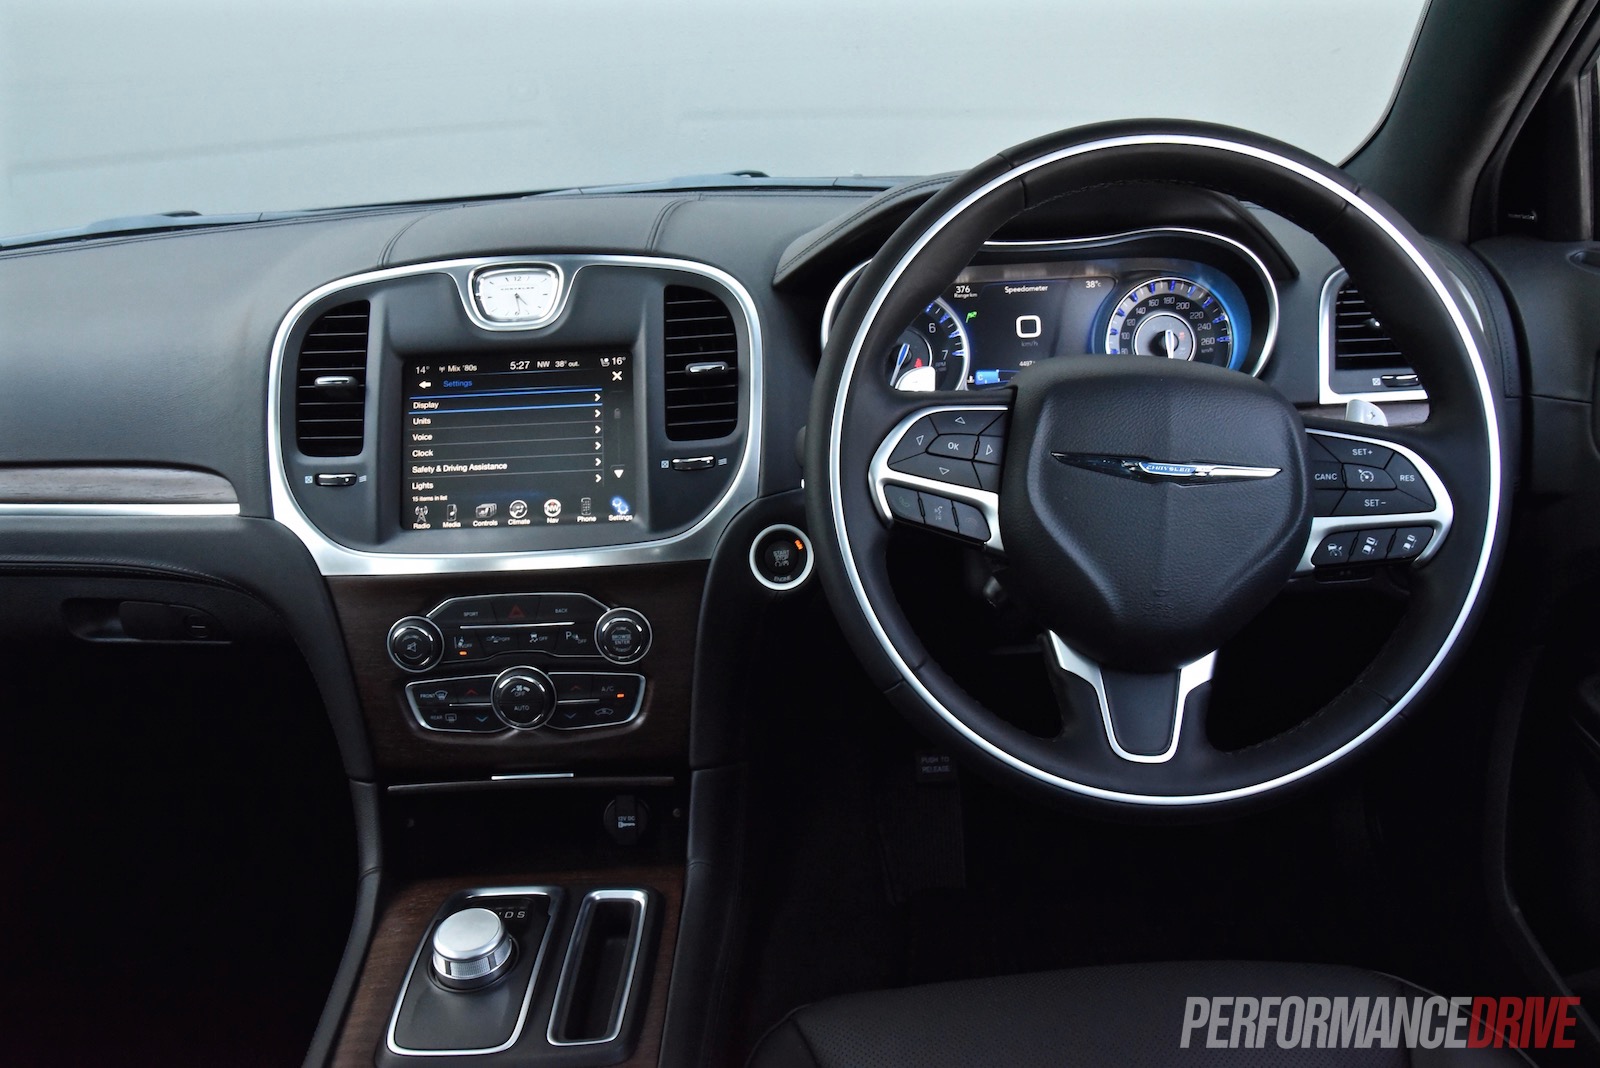 2015 Chrysler 300c Luxury Review Video Performancedrive